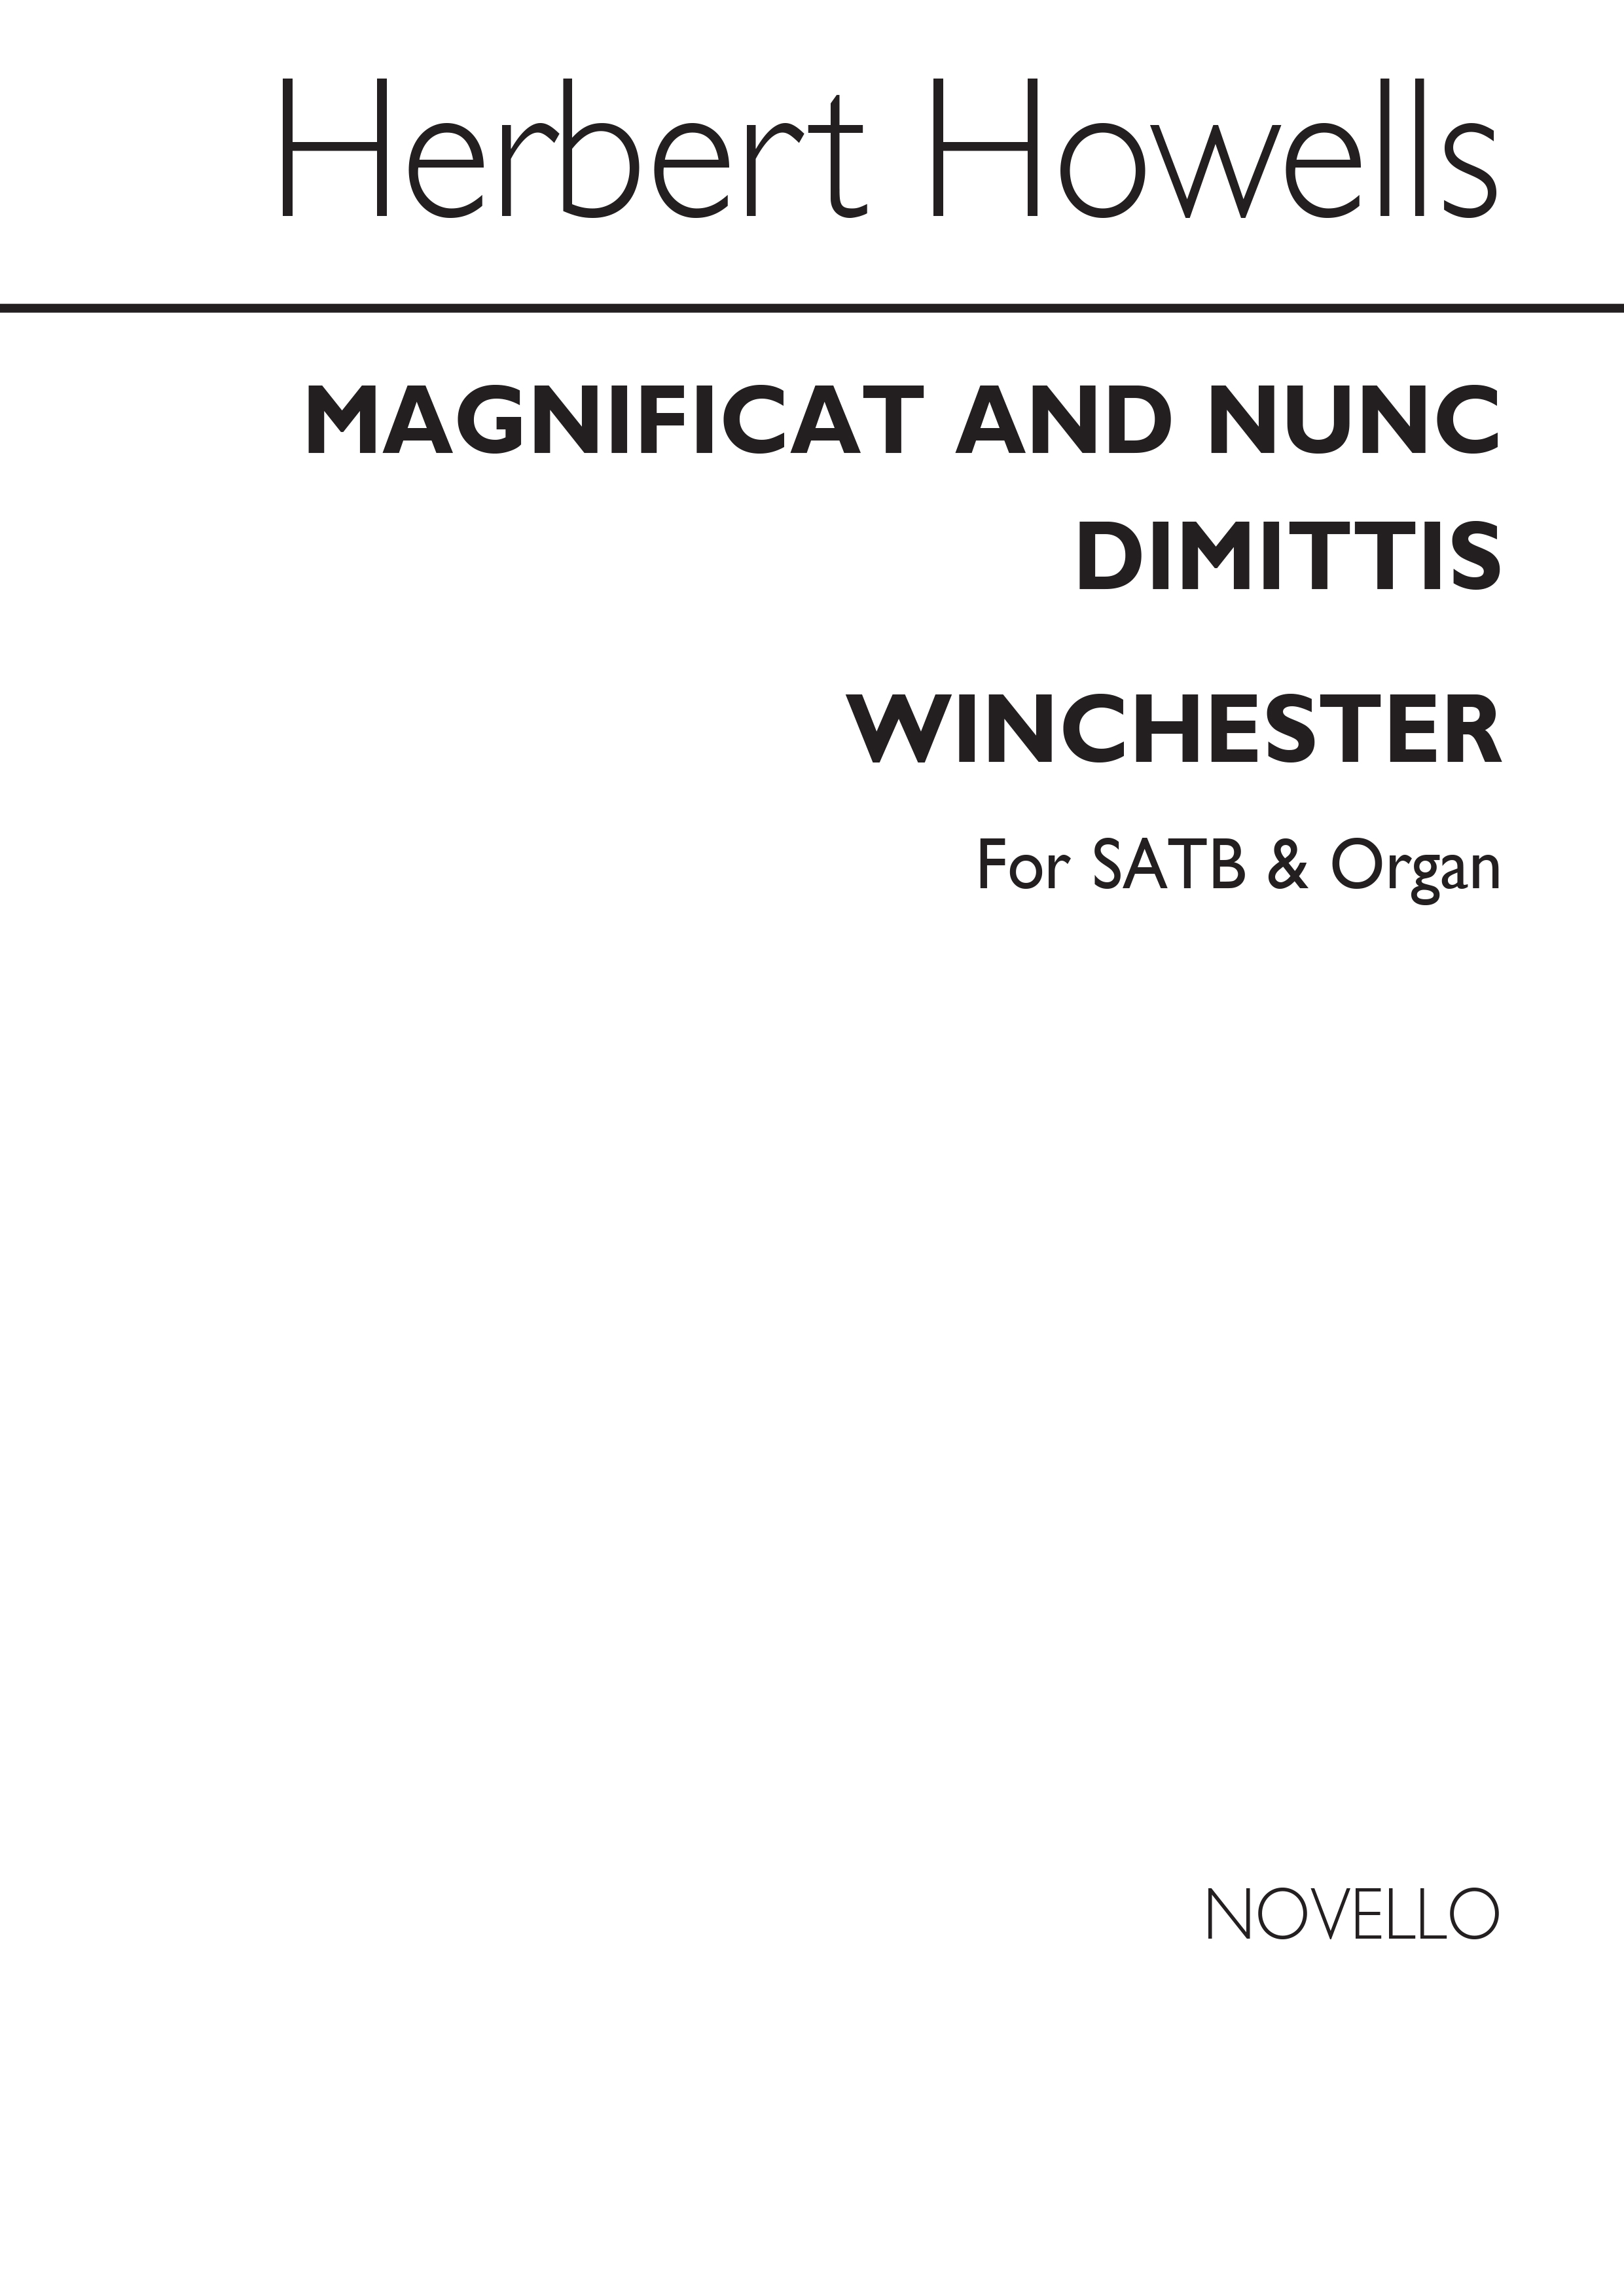 Herbert Howells: Magnificat And Nunc Dimittis (Winchester): SATB: Vocal Score